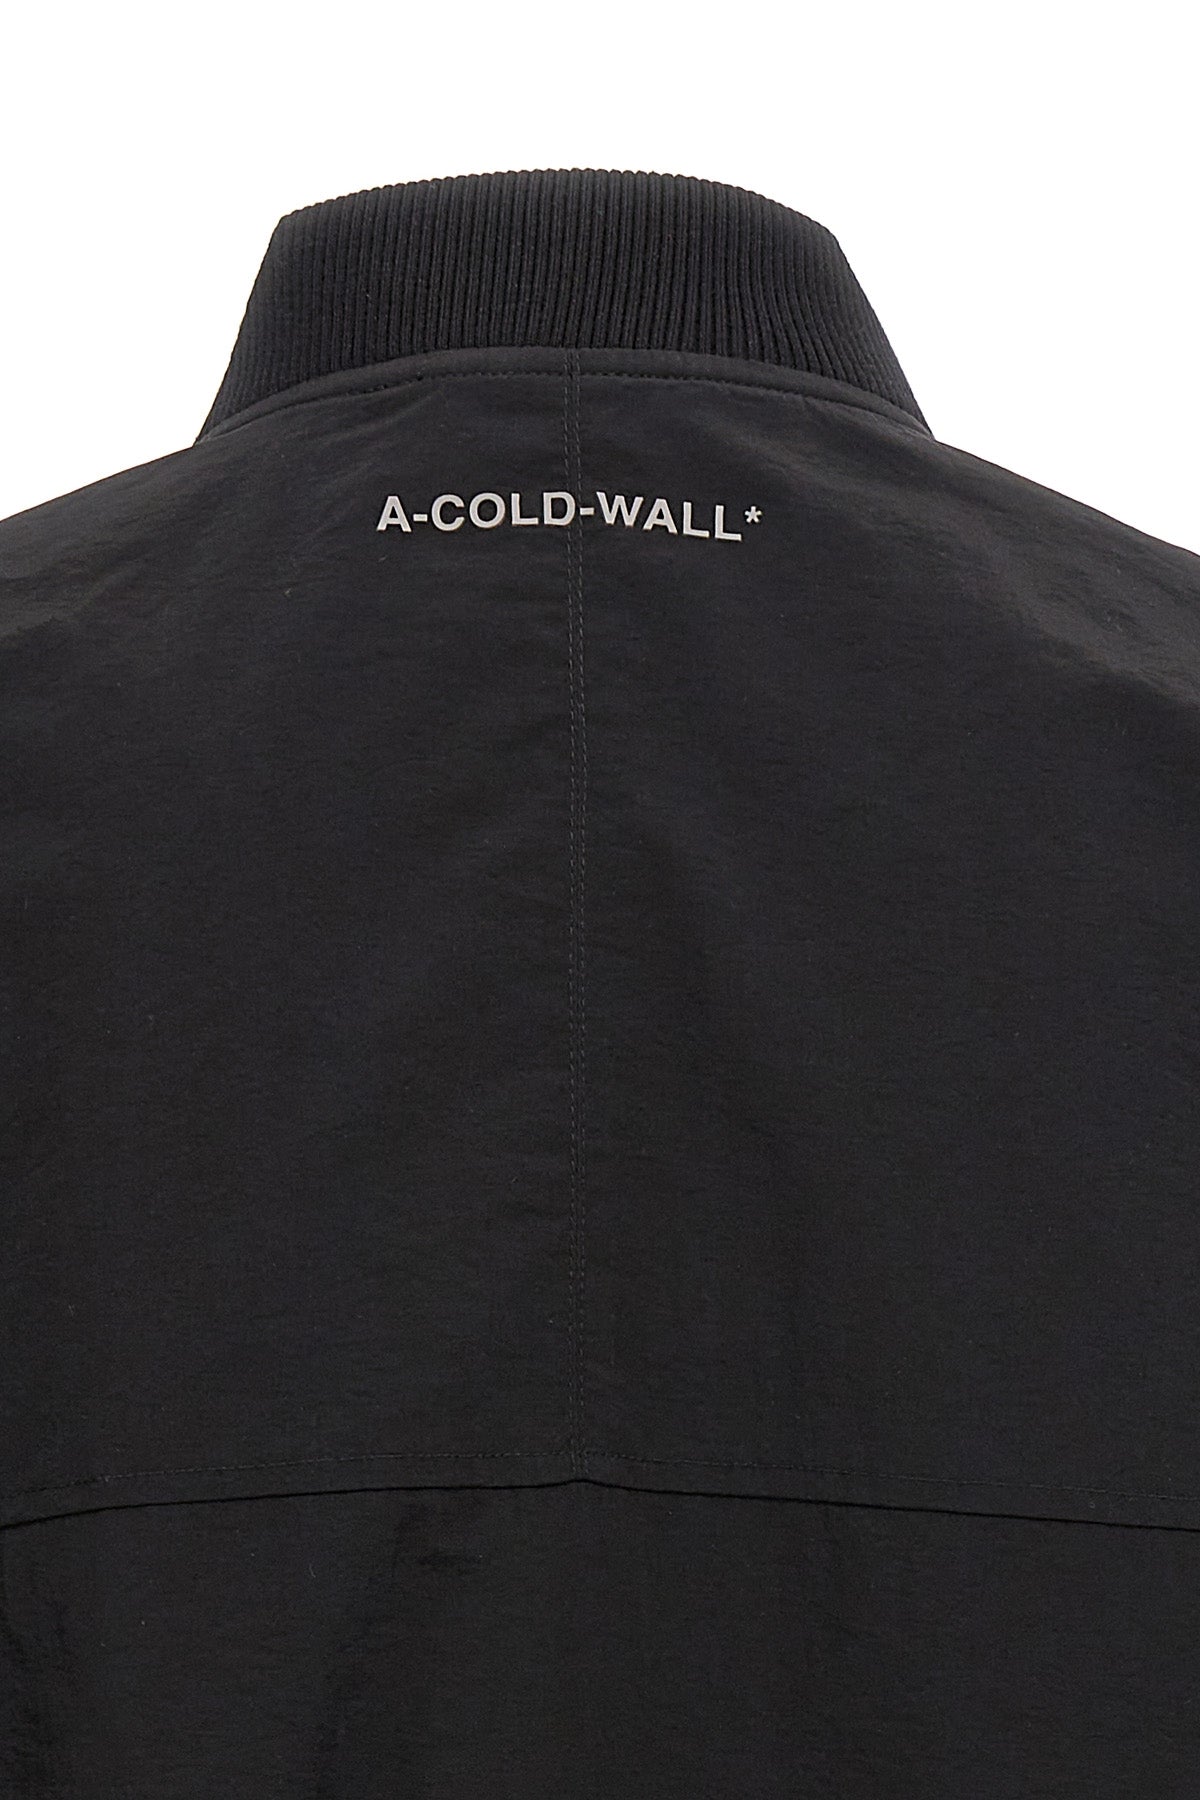 A-COLD-WALL* 'IMPRINT' BOMBER JACKET ACWMO156BLACK